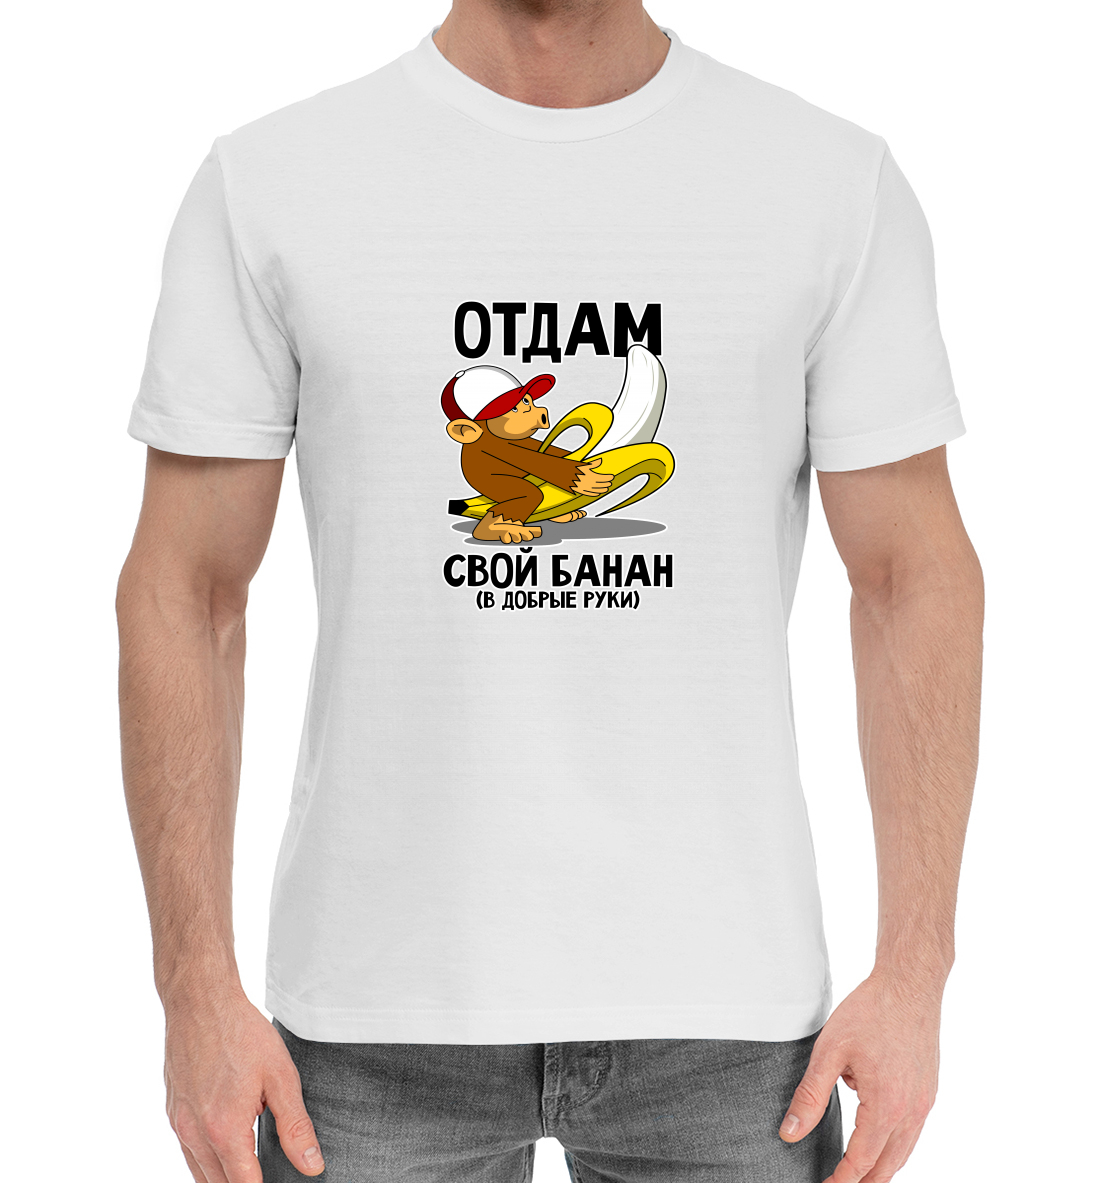 Мужская Хлопковая футболка с надписью Отдам банан, артикул NDP-353420-hfu-2mp